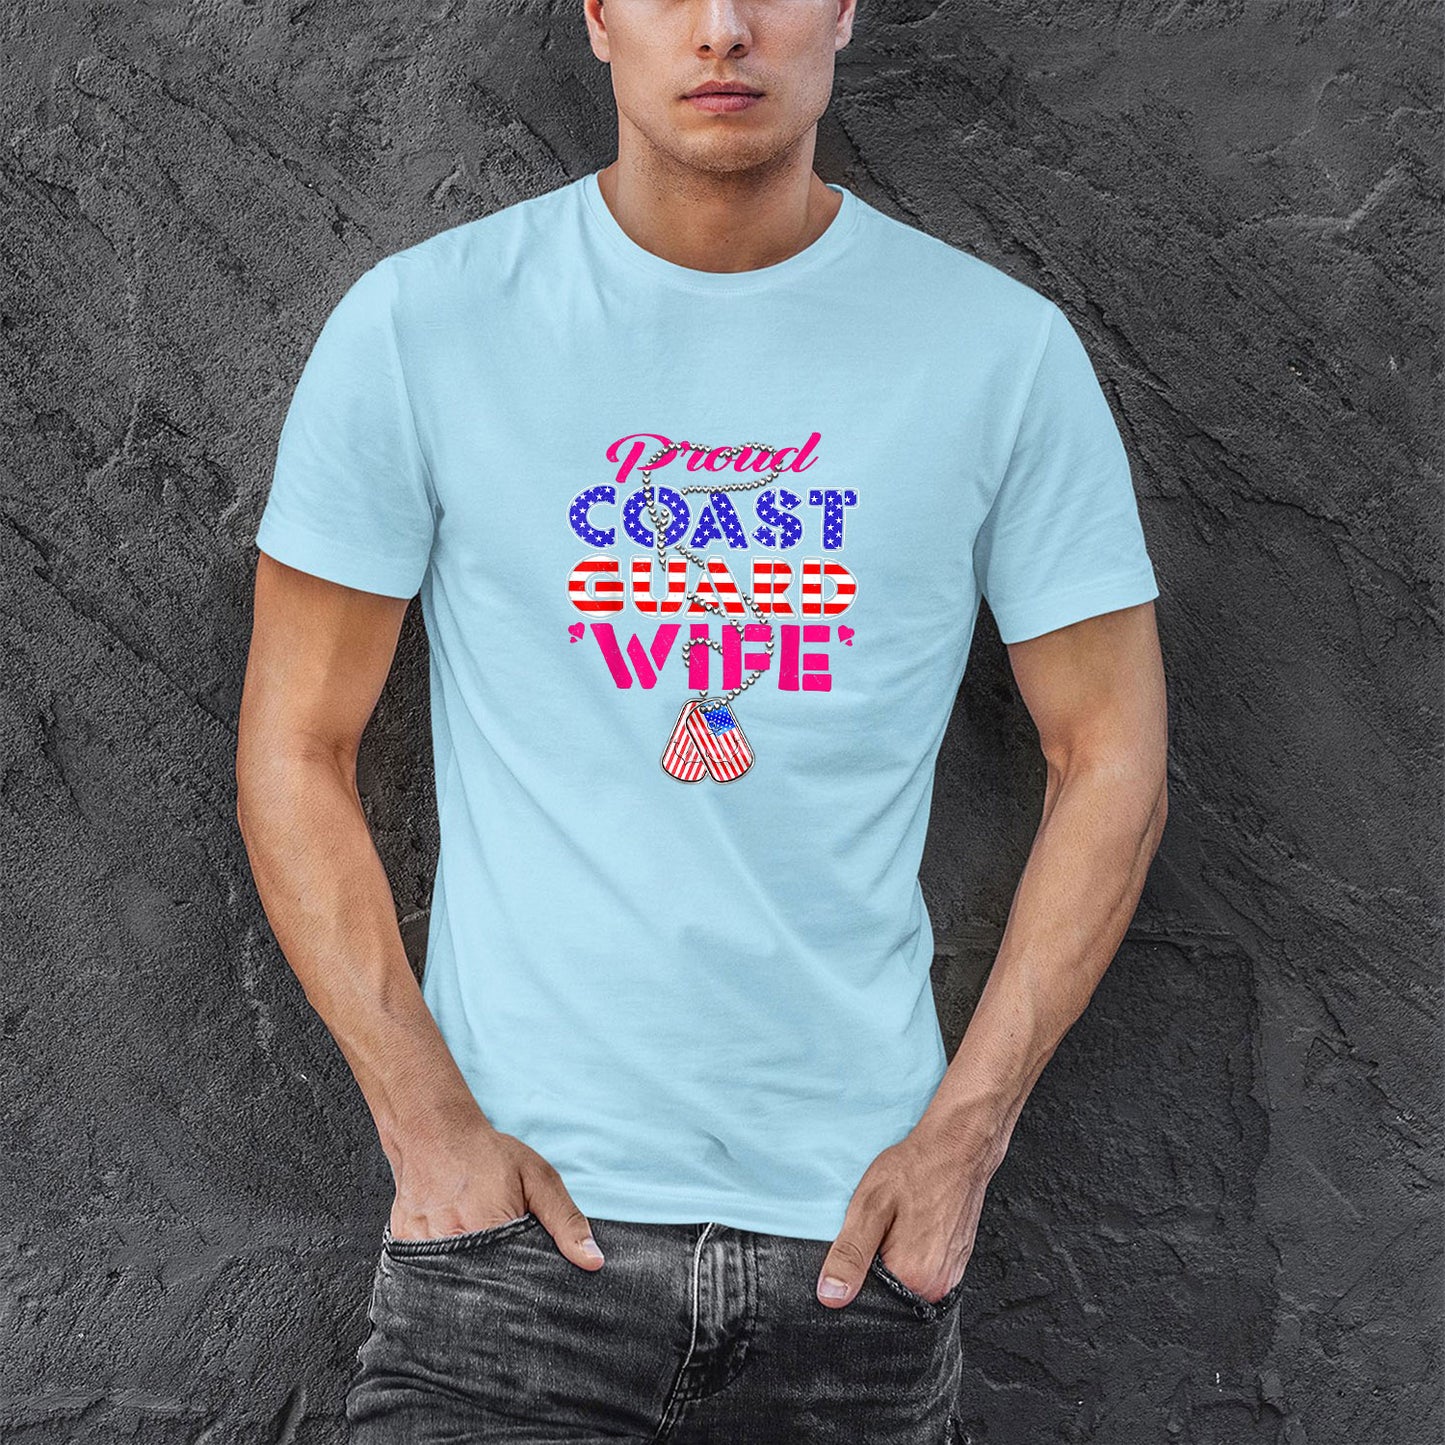 Memorial Day 2021 Coast Guard Wife Shirt, Proud US Coast Guard Wife US Flag Dog Tags Military Spouse Shirt For Men, Cotton Shirt, Air Force Memorial Shirt, Usaf T Shirt